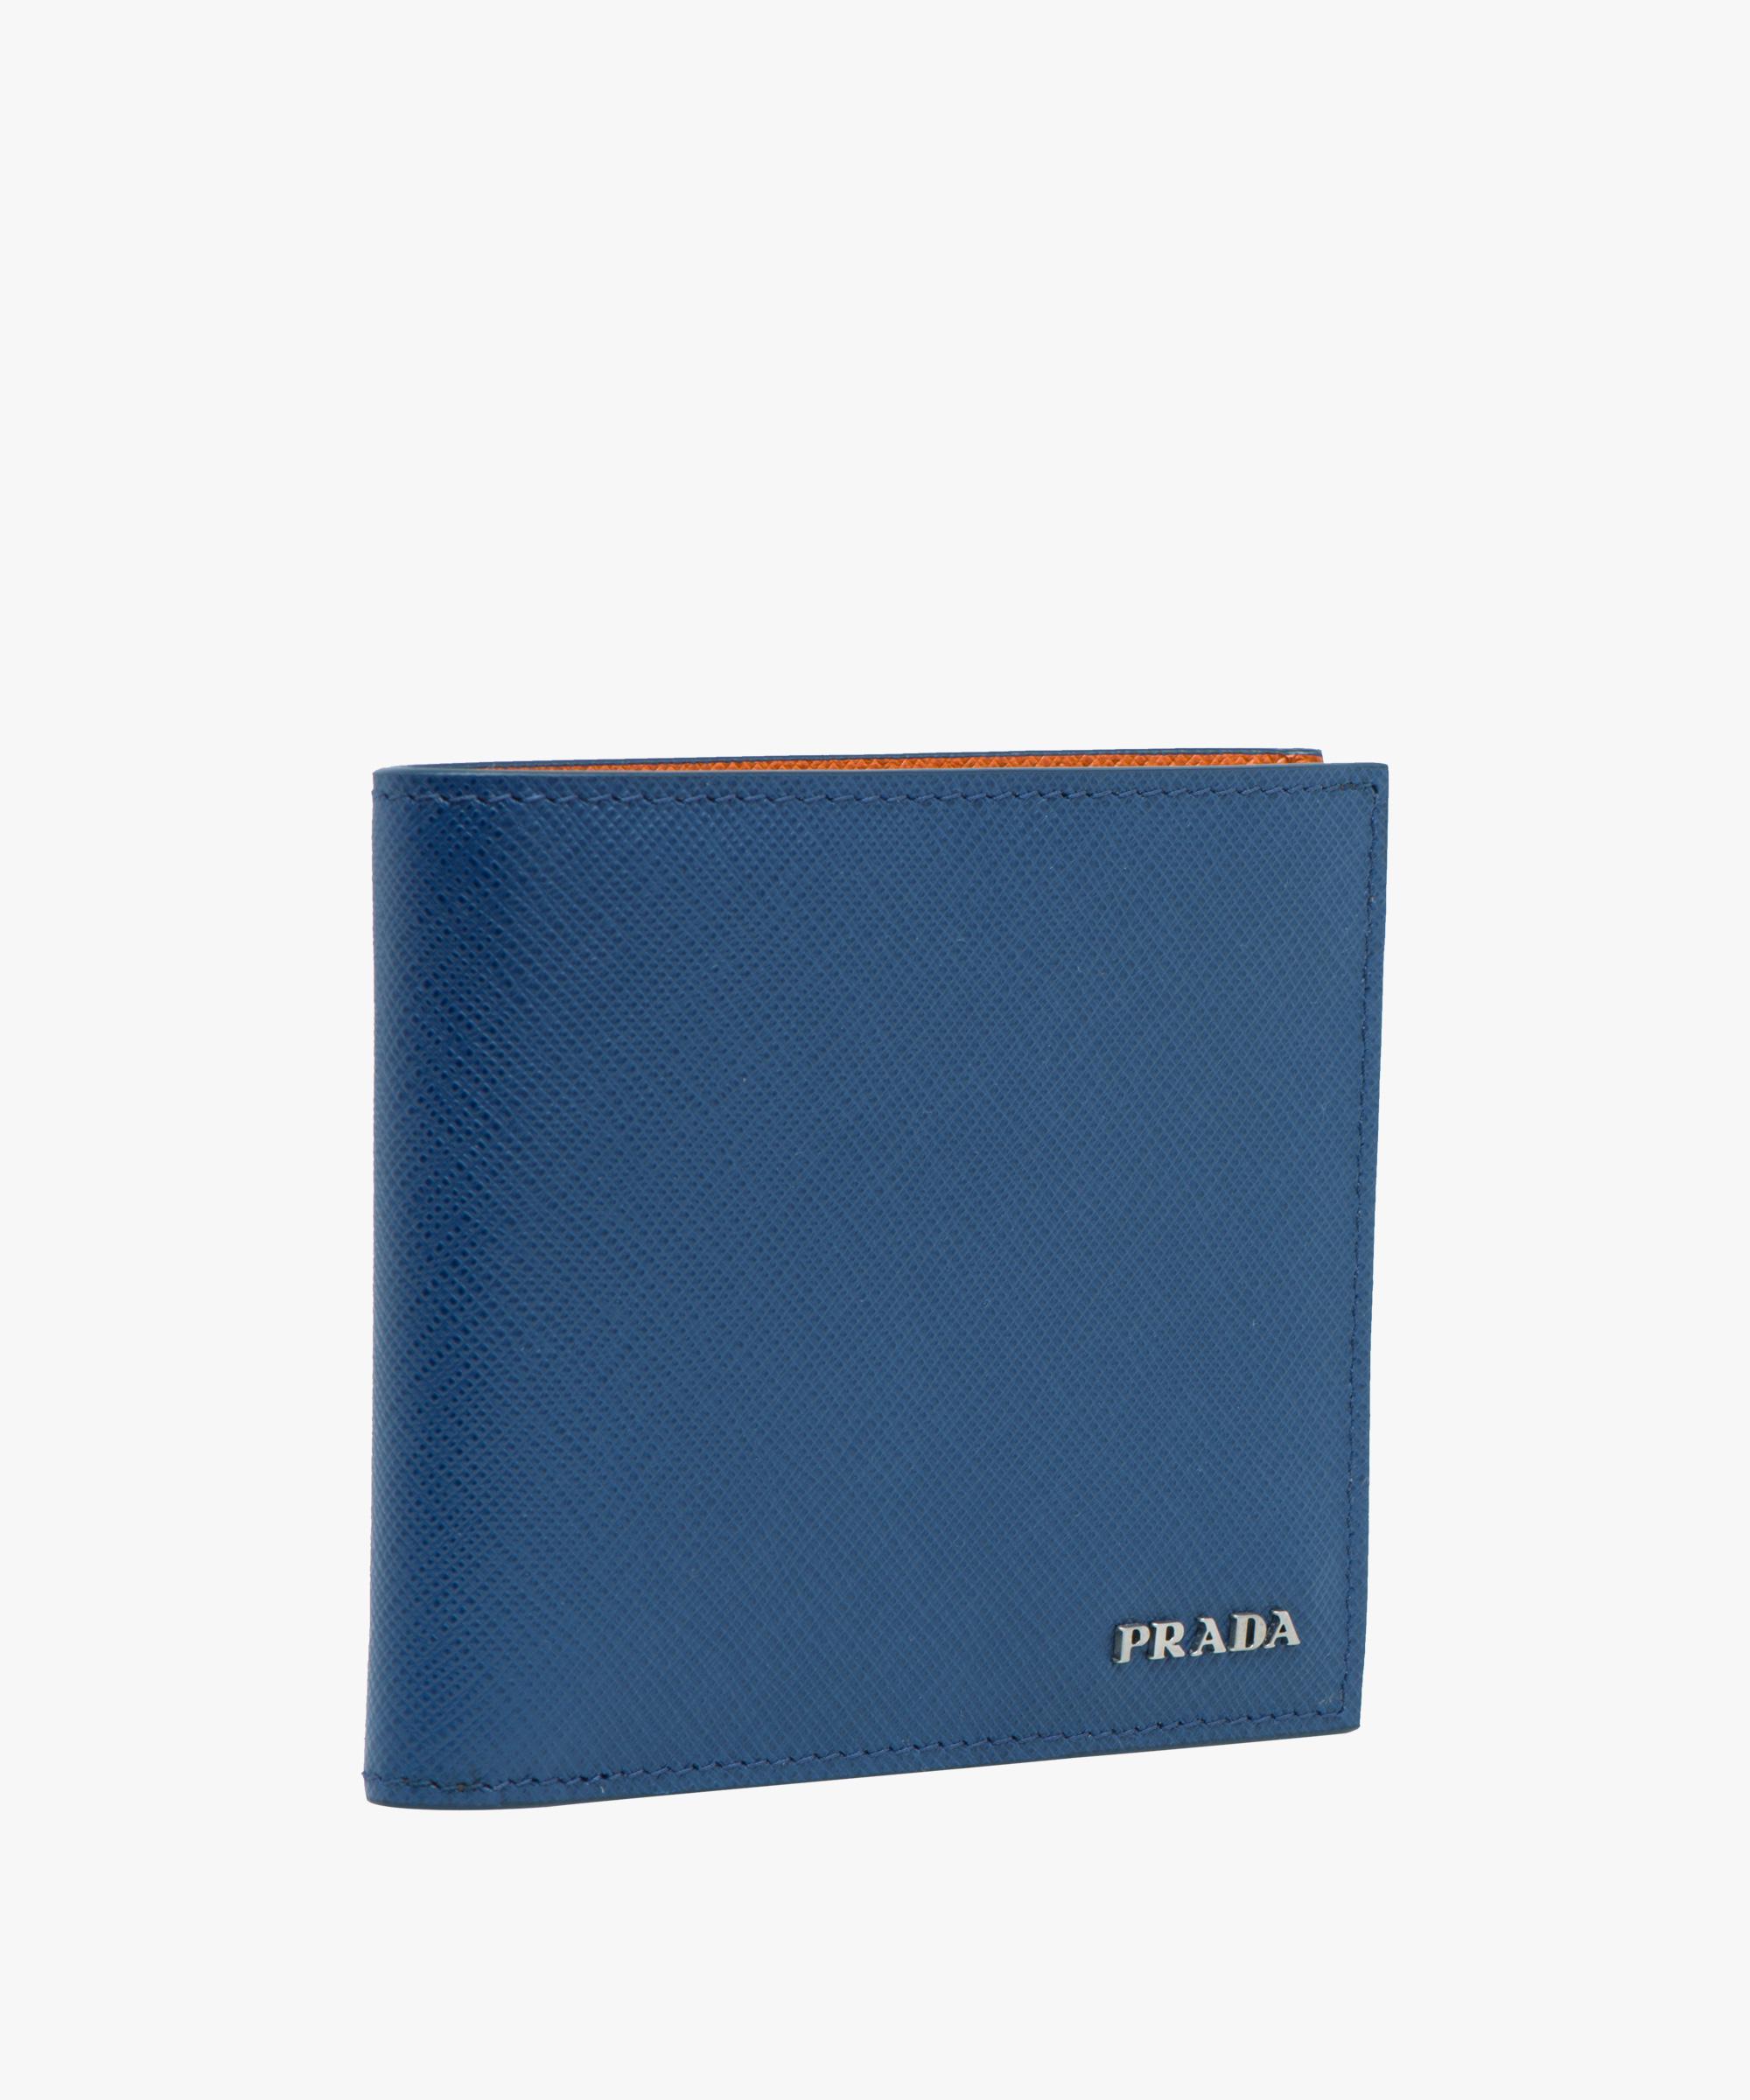 Prada Saffiano Leather Wallet in Blue for Men